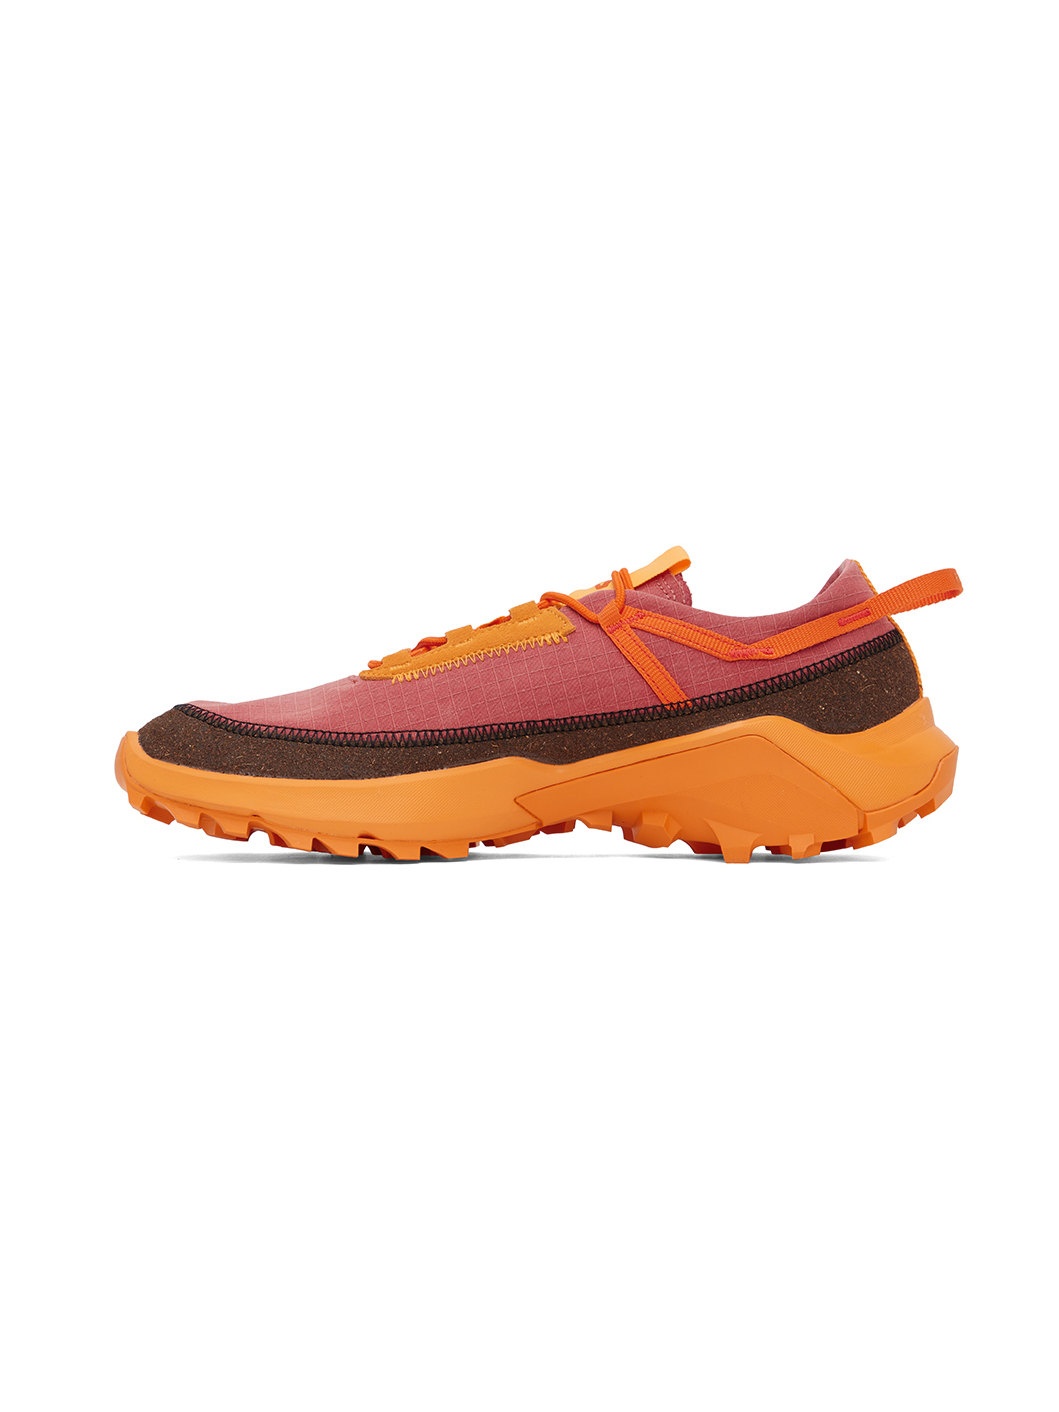 Red & Orange Salomon Edition Cross Pro Better Sneakers - 3